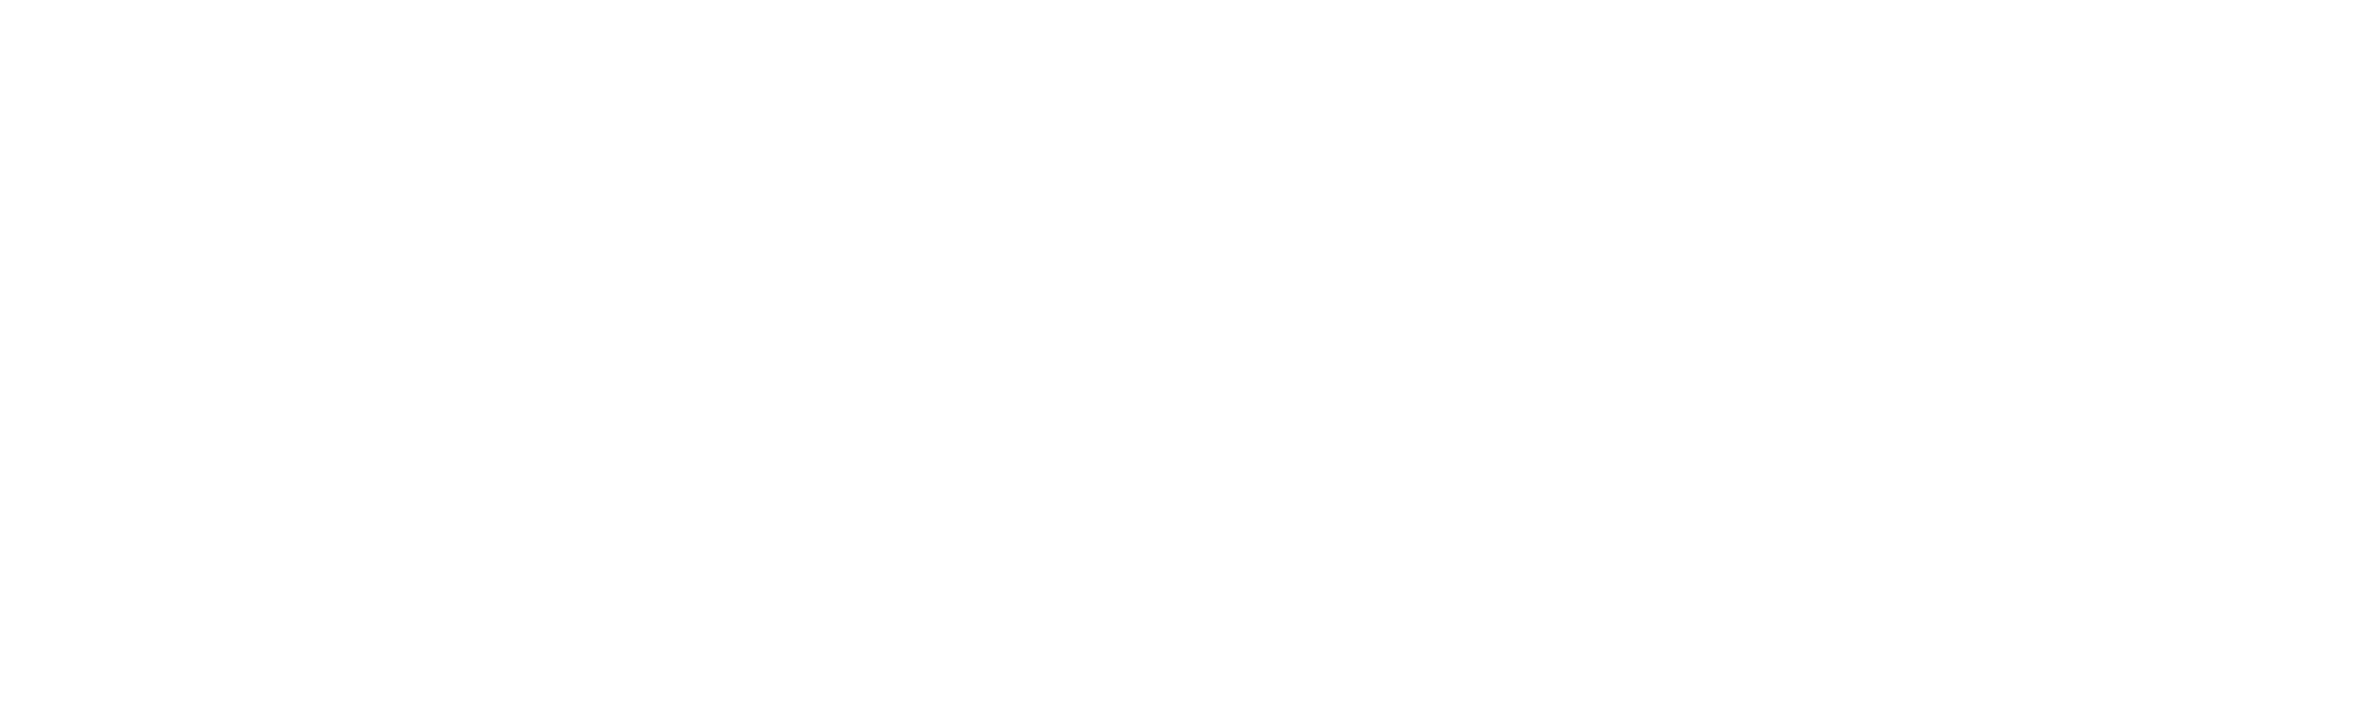 Eufinger Law Offices - white logo